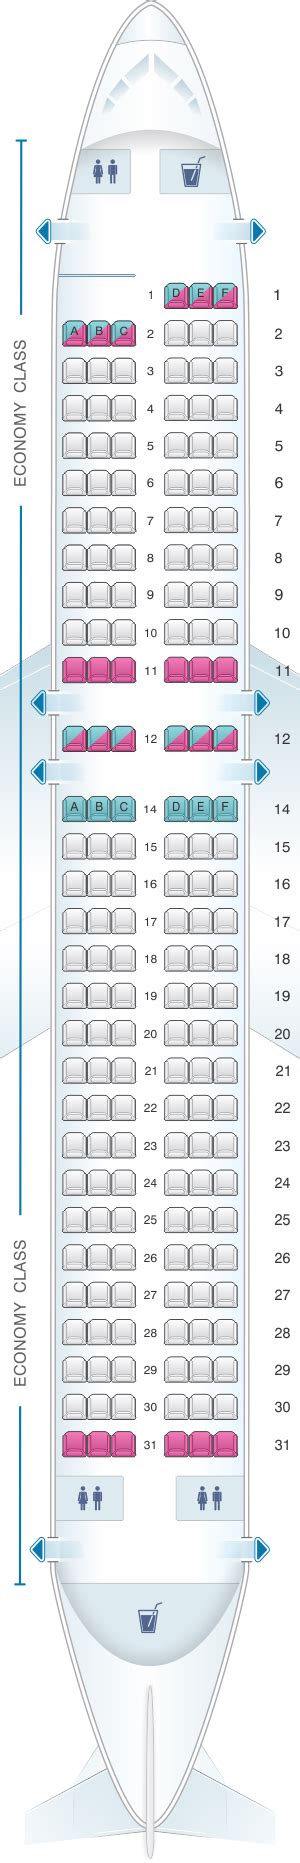 Airplane seating chart allegiant airAllegiant 